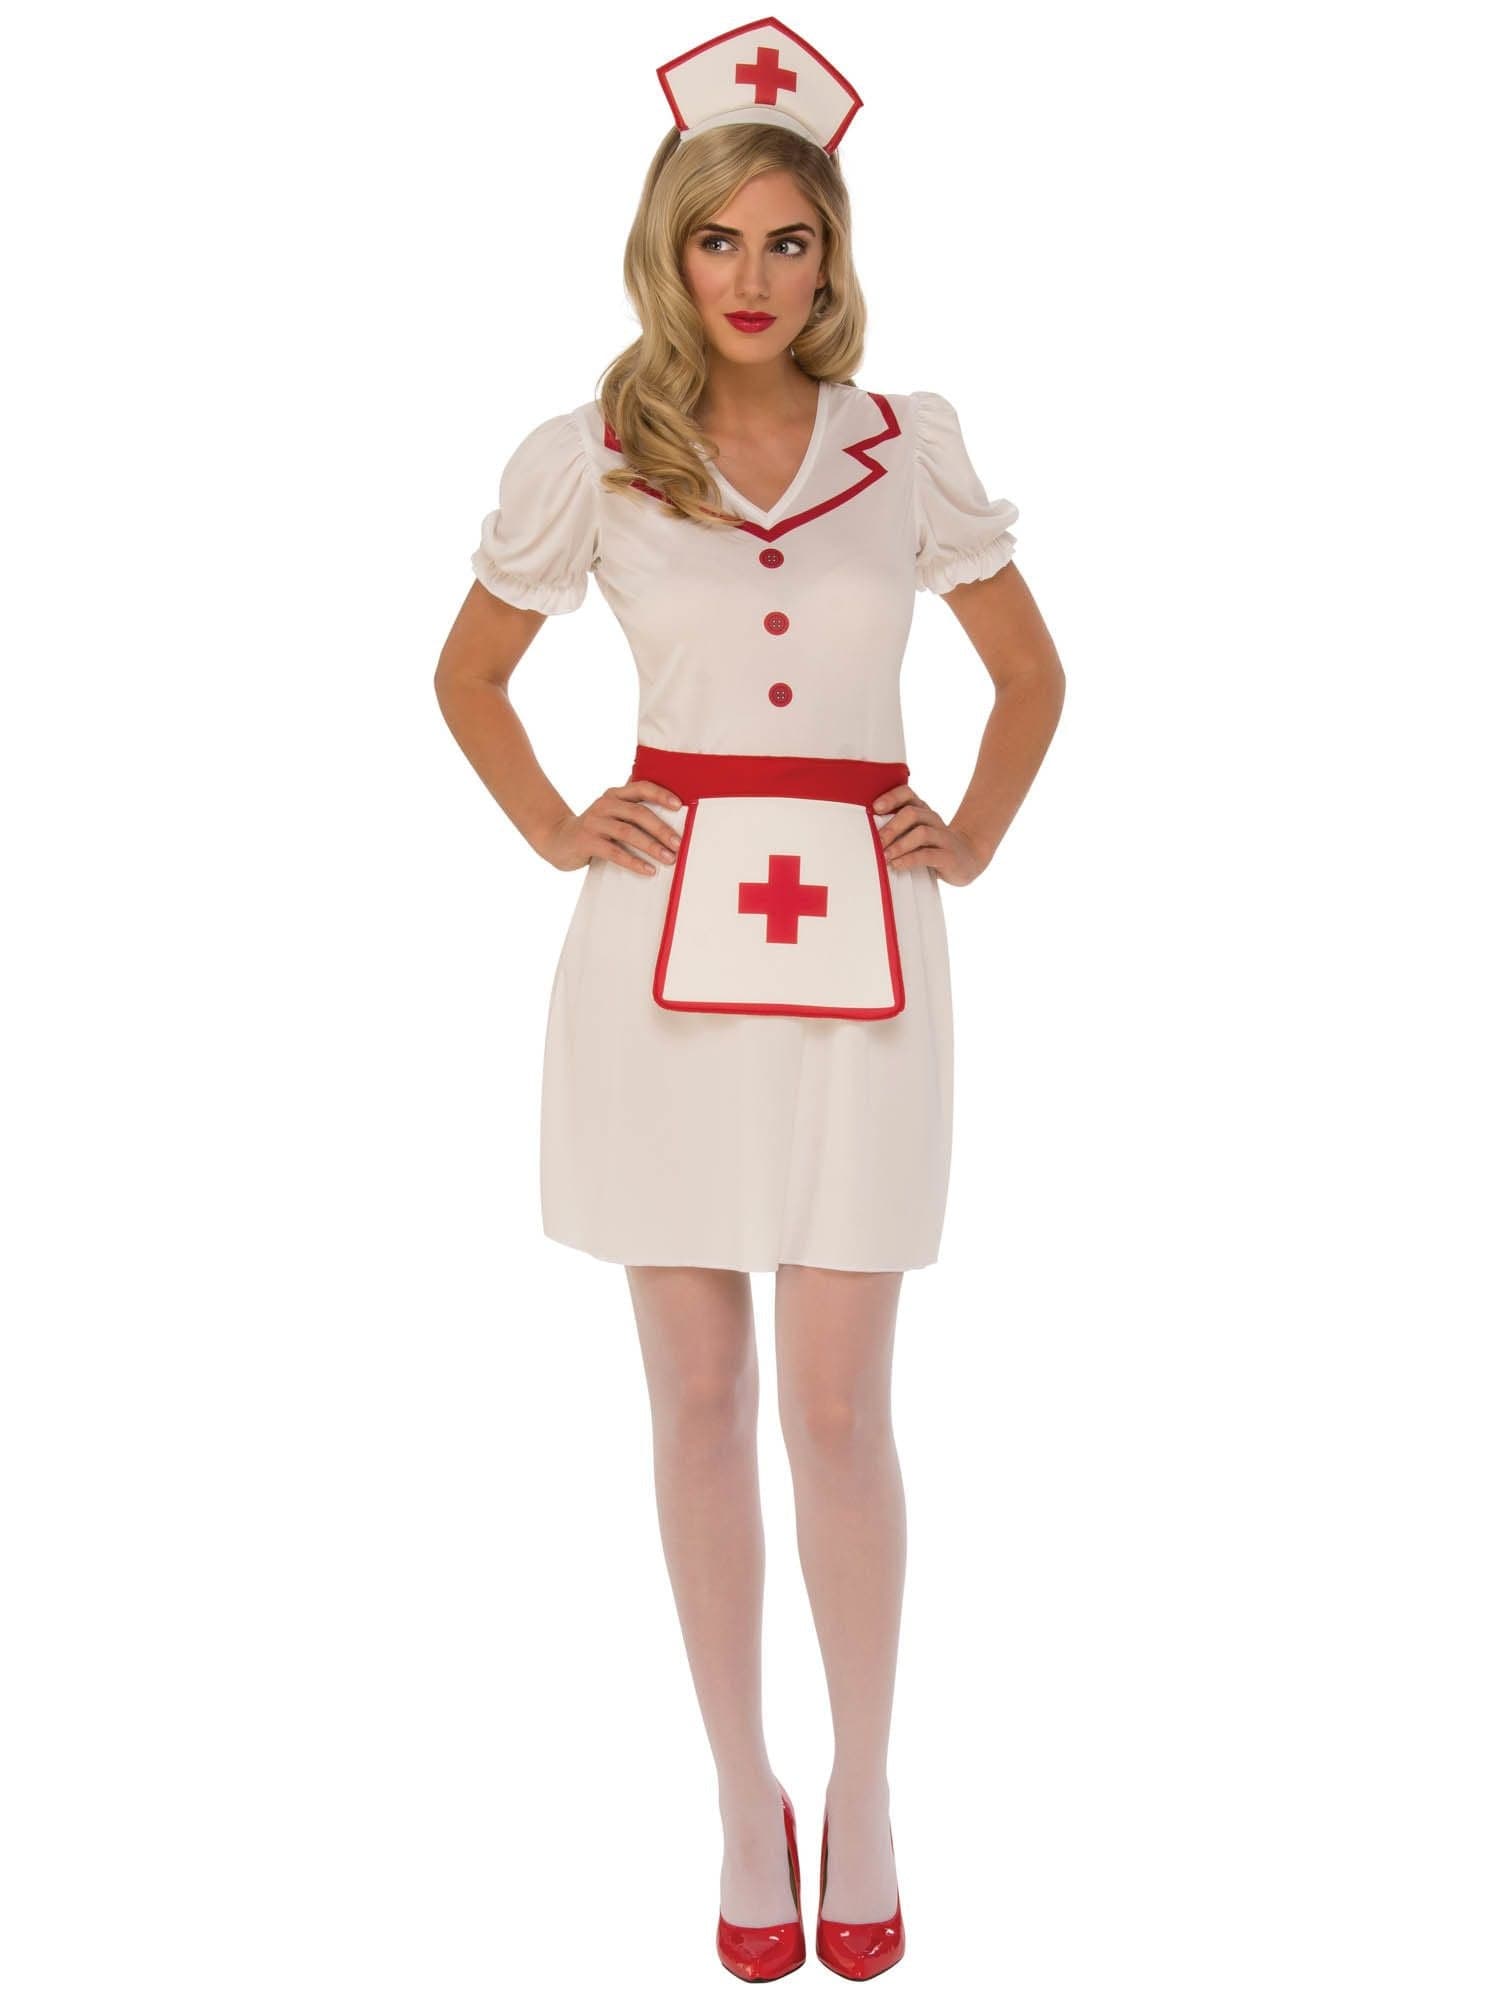 Women's Red and White Retro Nurse Costume - costumes.com